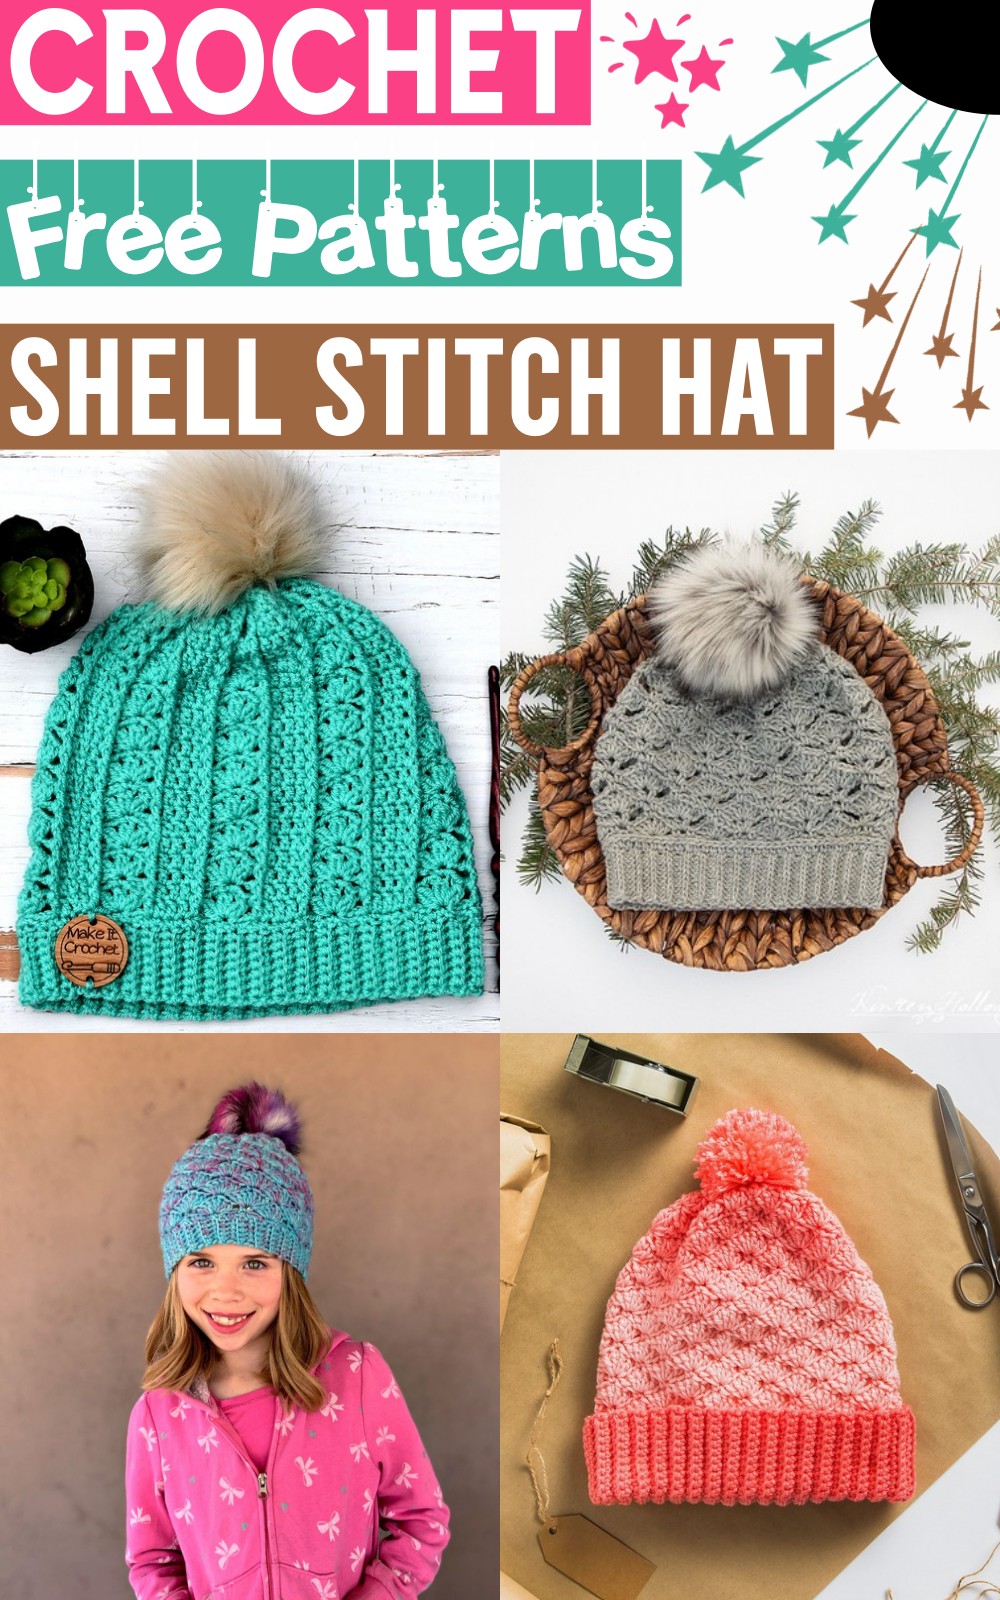 Free Crochet Hat Patterns With Shell Stitch